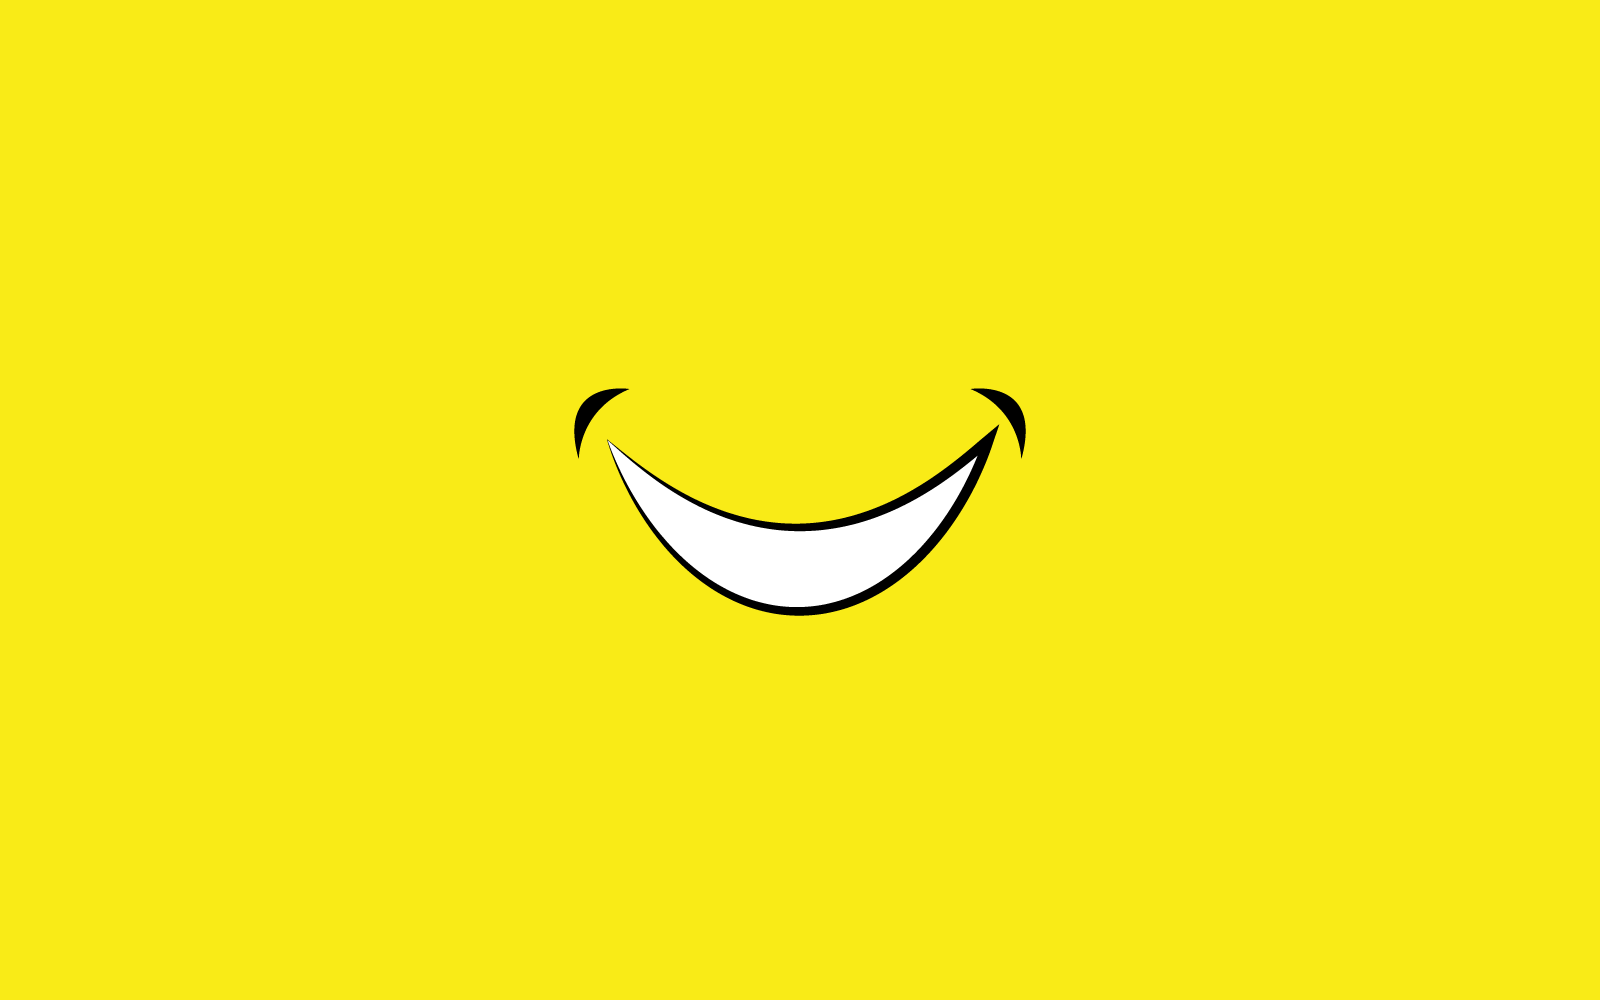 Smile happy face vector design template